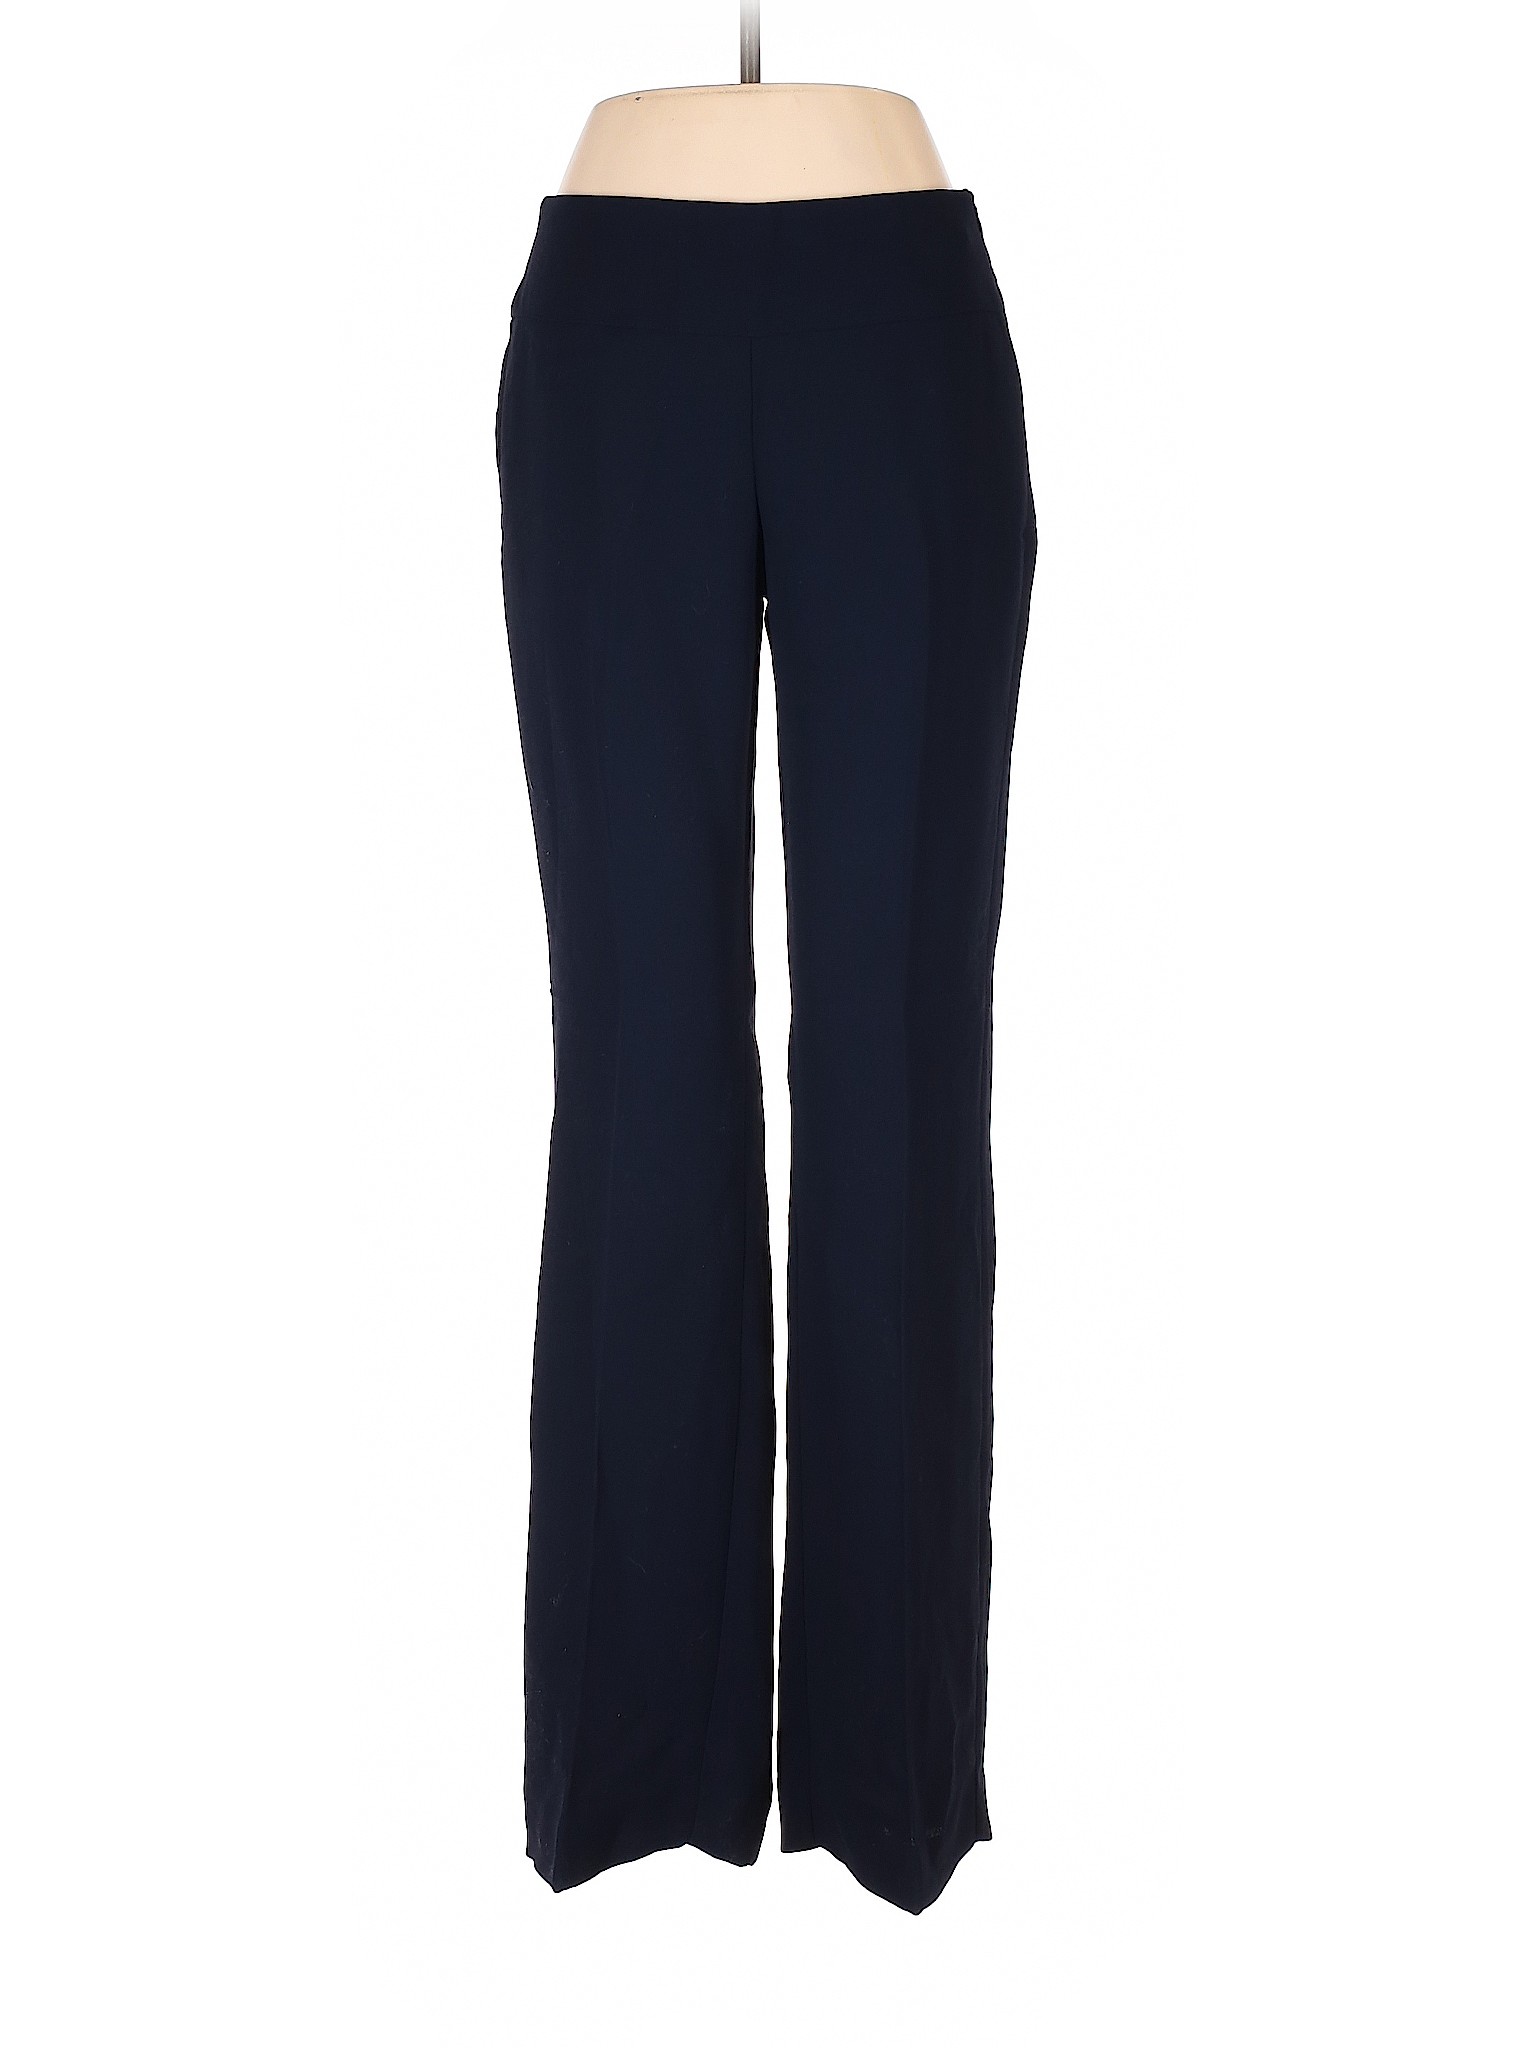 CAbi Women Blue Dress Pants 2 | eBay